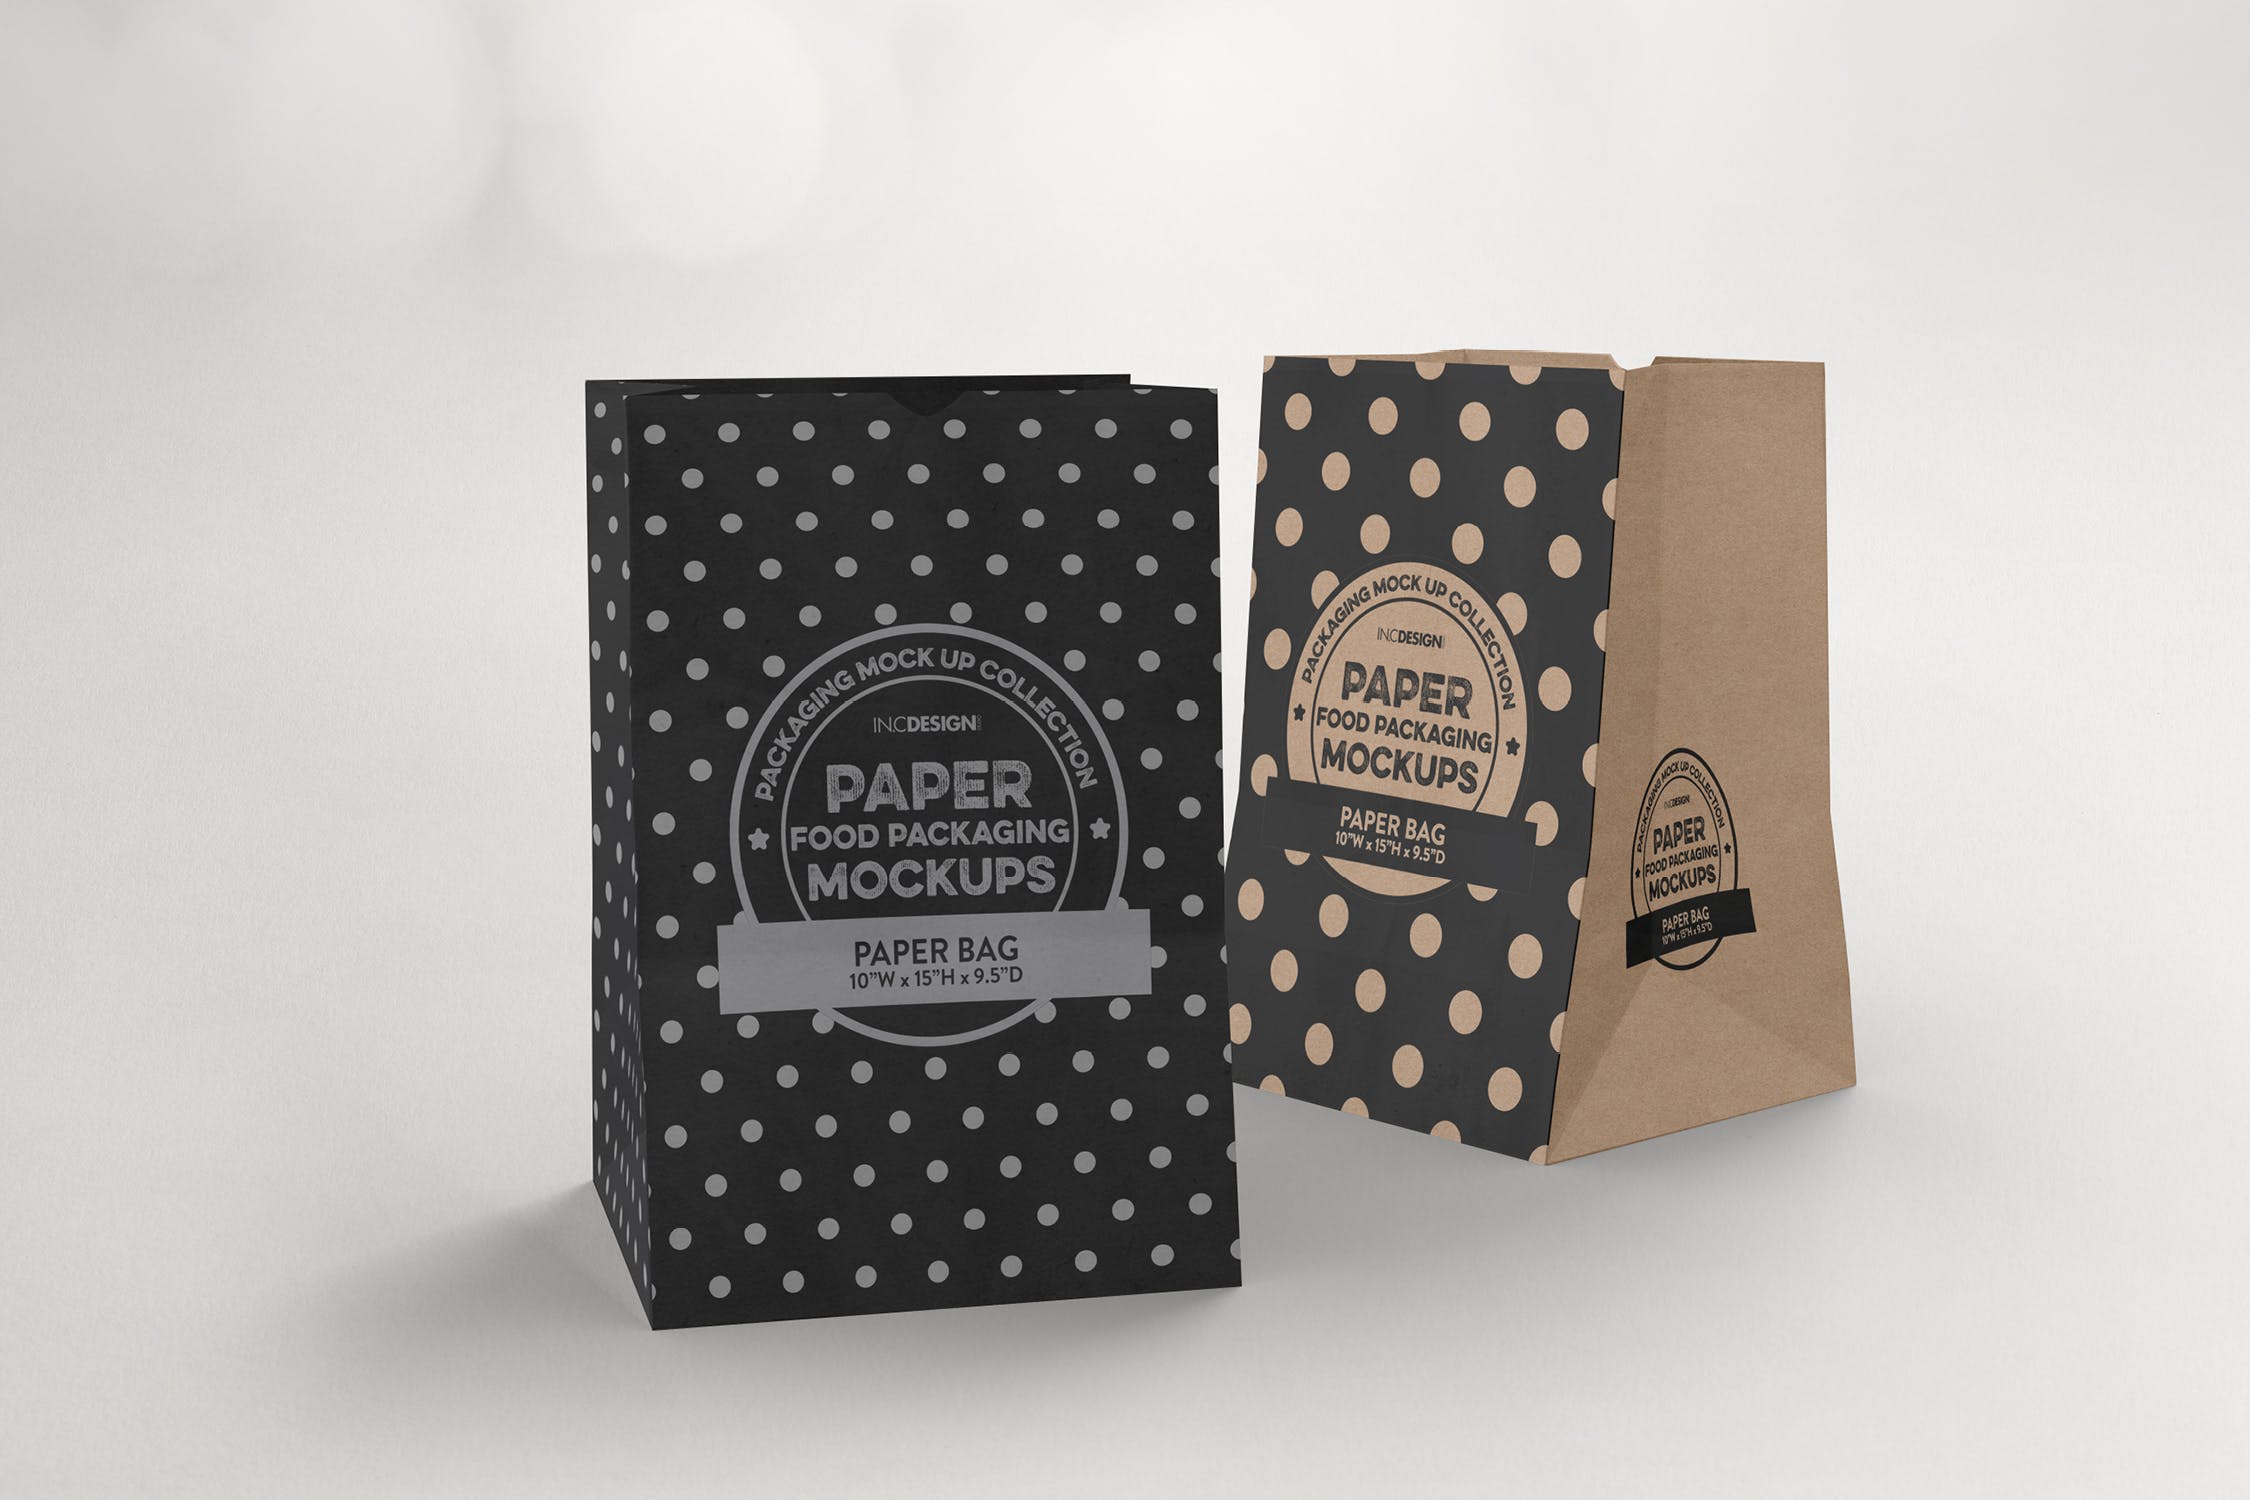 杂货纸袋包装设计效果图素材中国精选 Grocery Paper Bags Packaging Mockup插图(2)